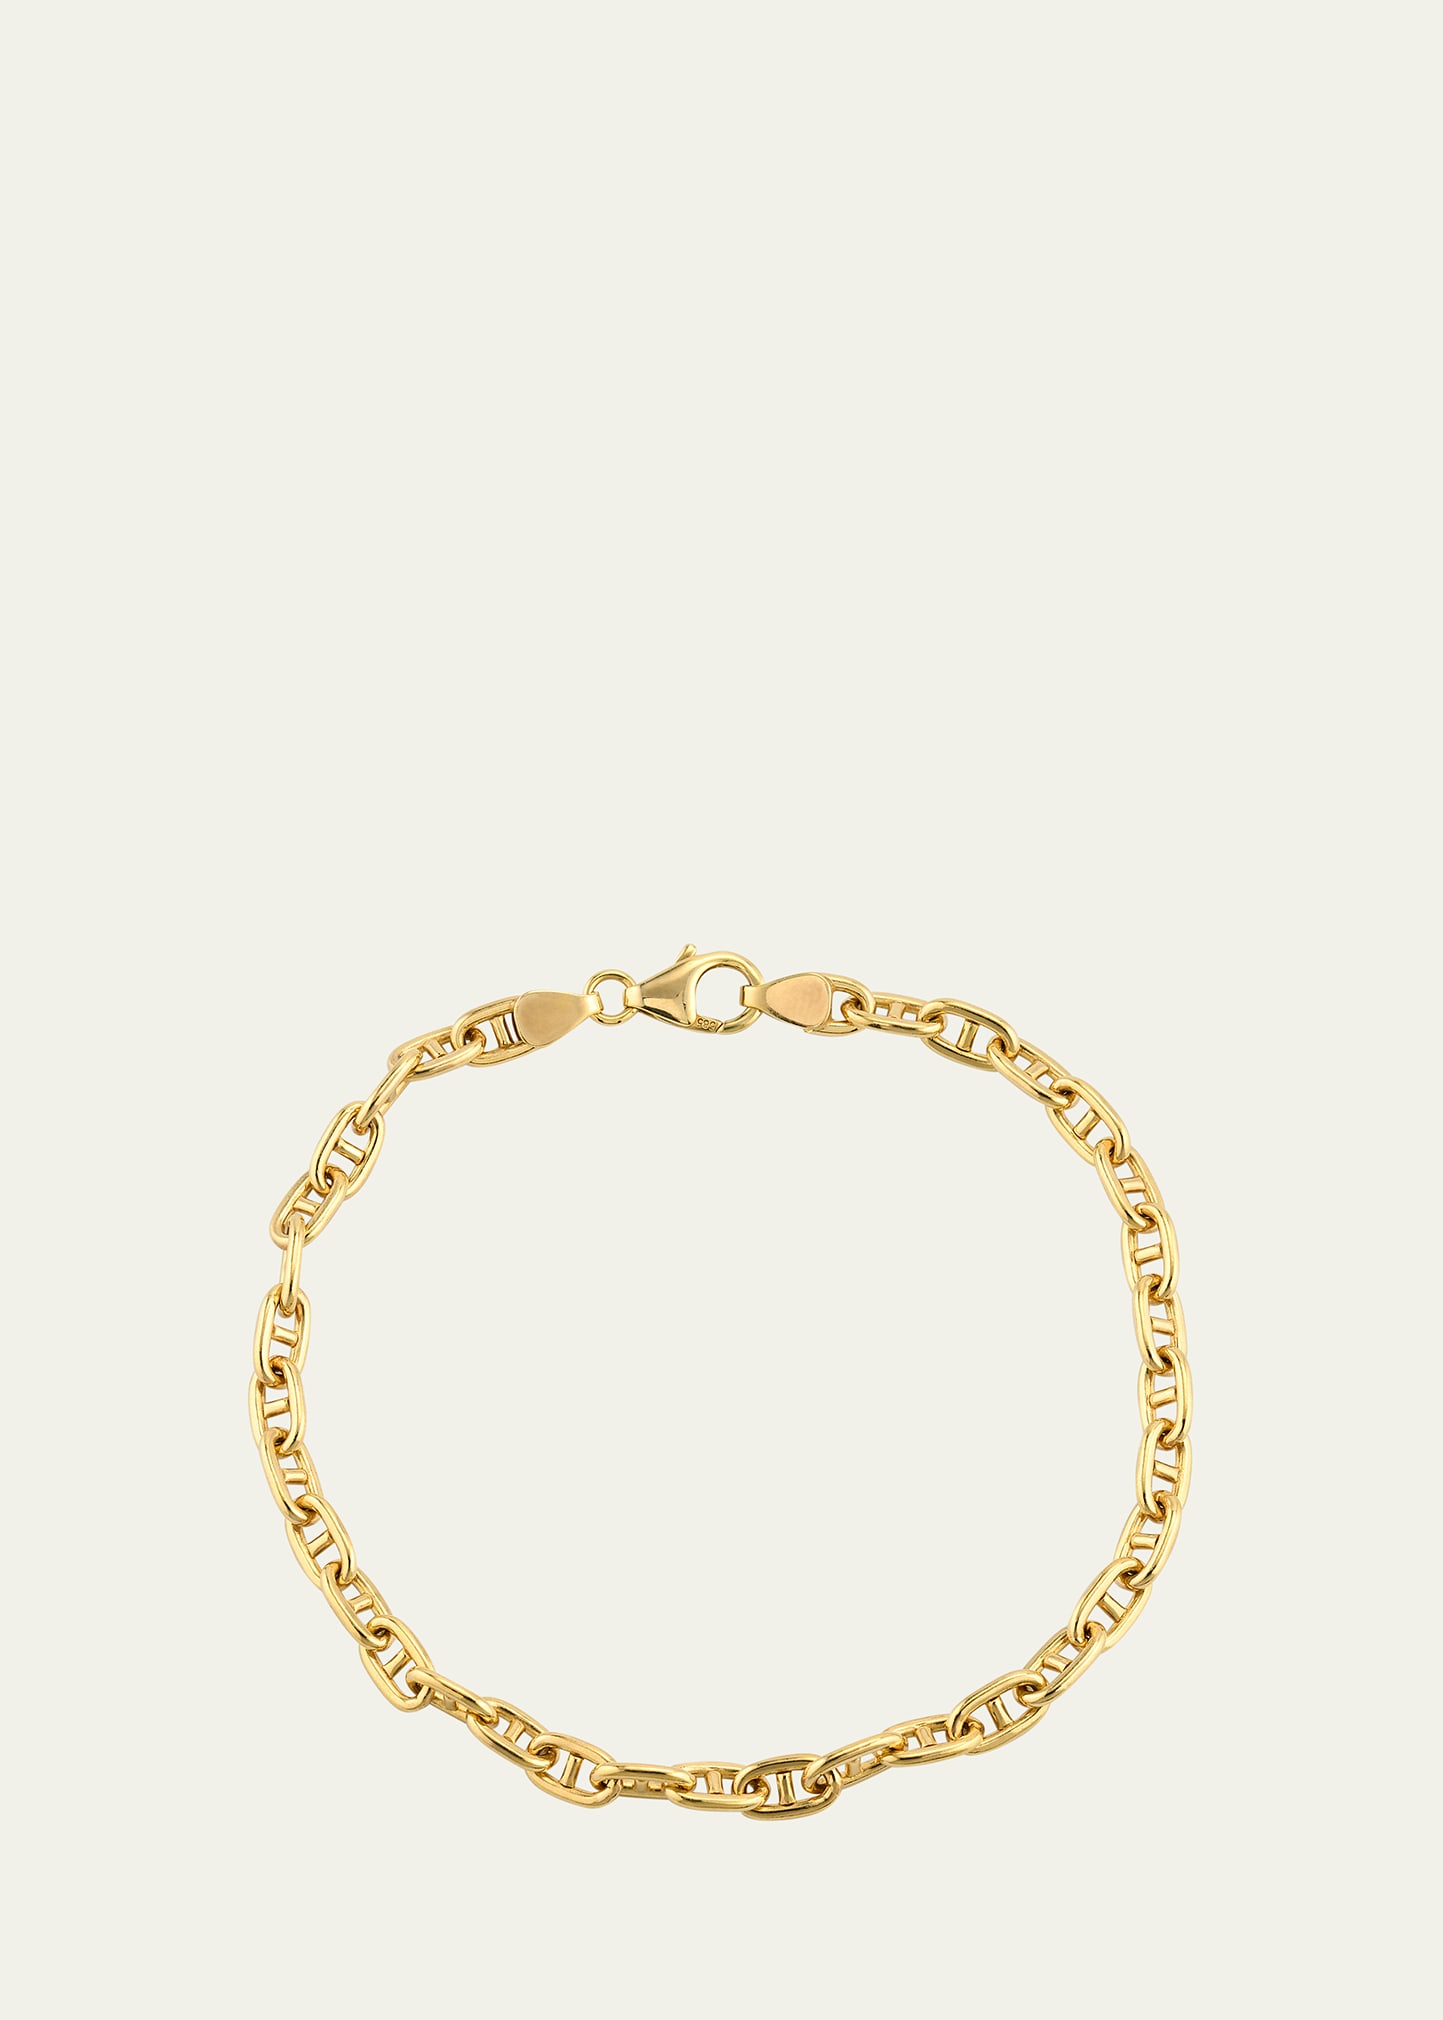 Men's 14K Yellow Gold Large Marine Link Chain Bracelet, 8"L